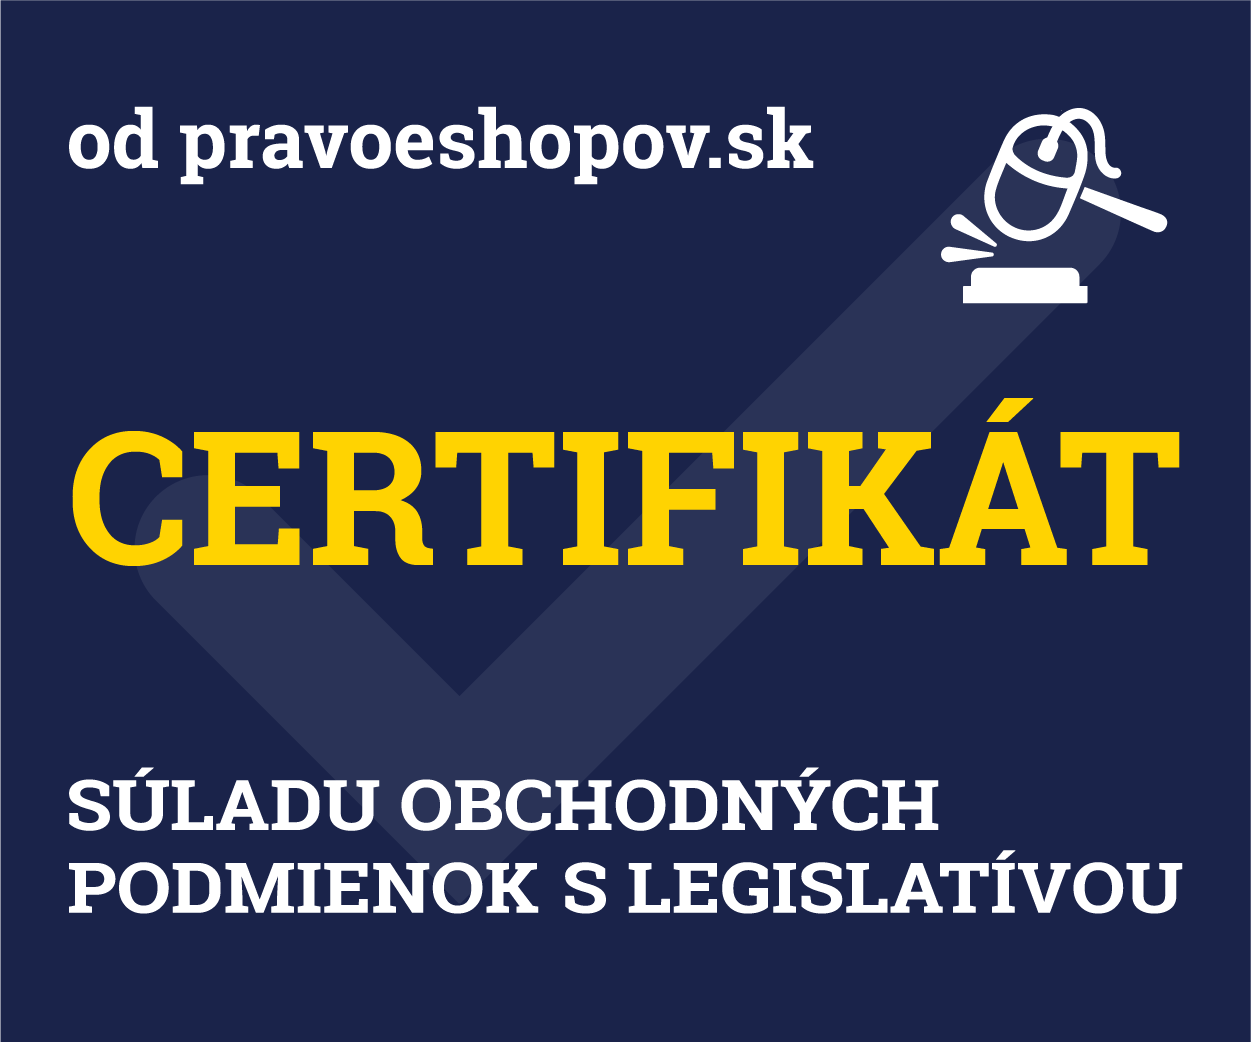 Certifikát od pravaeshopov.sk